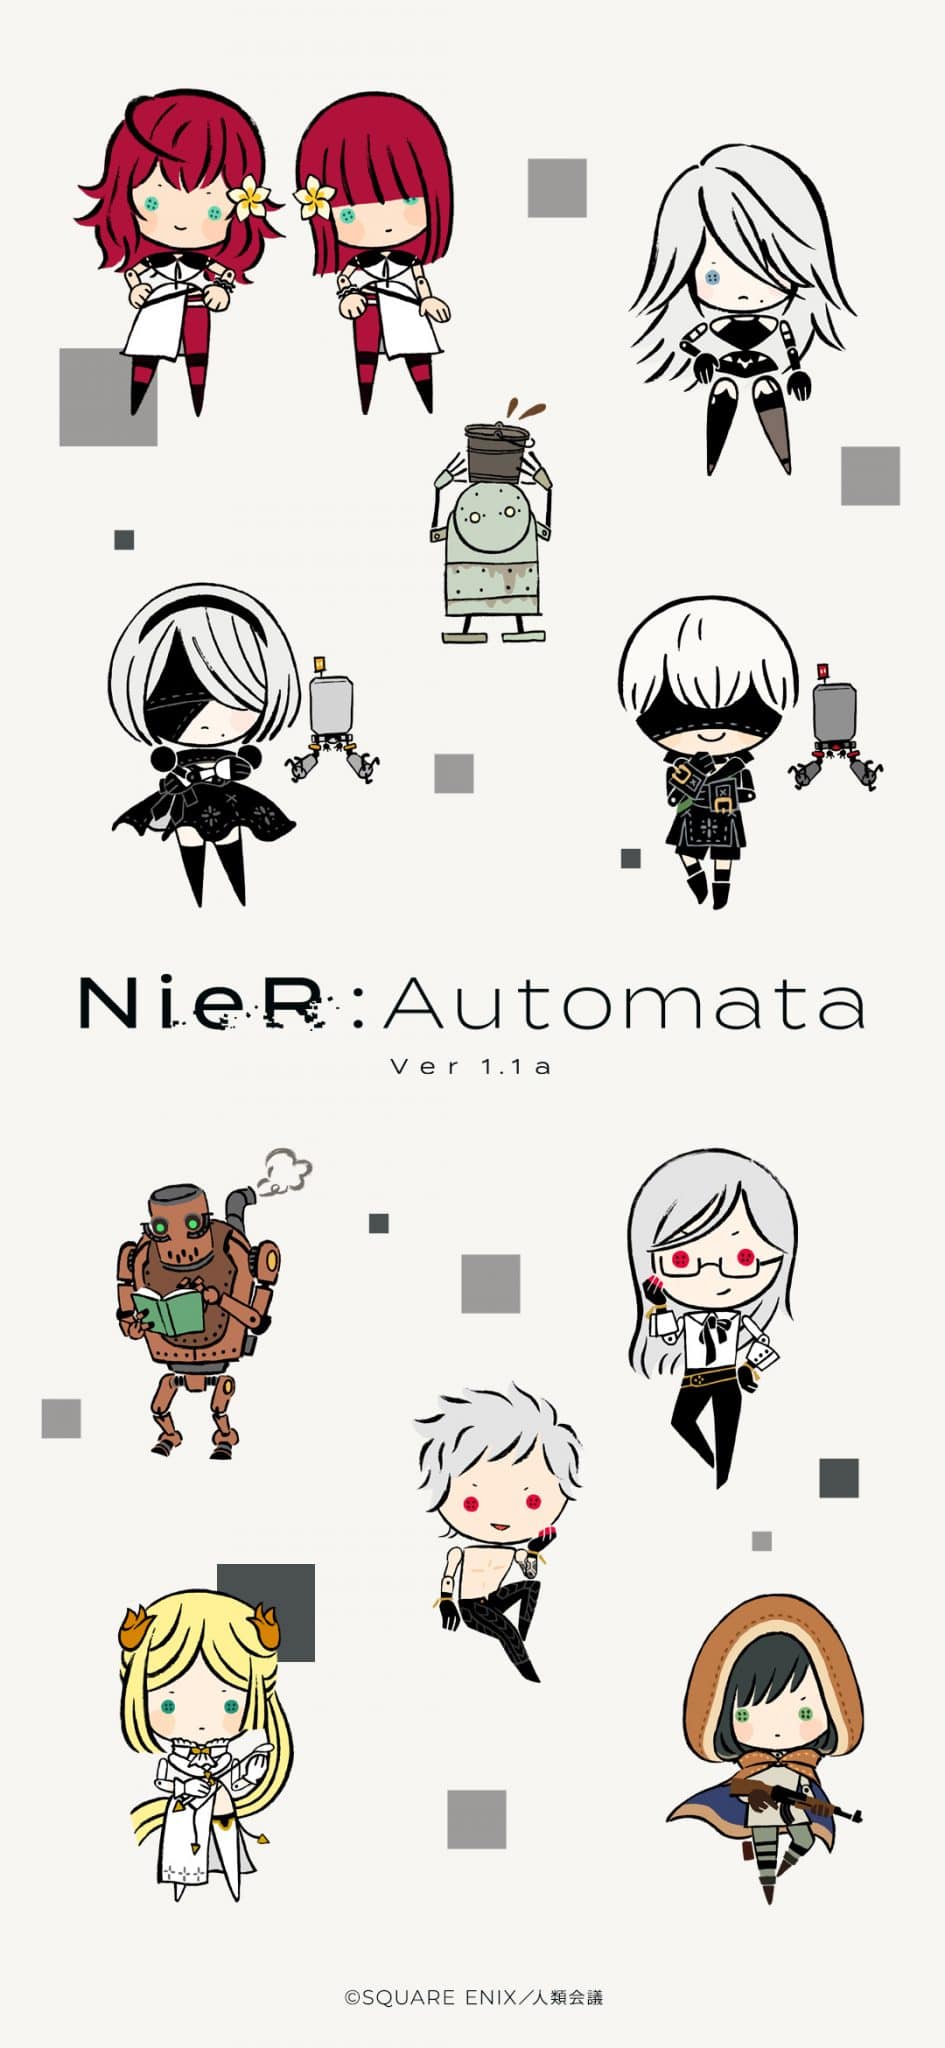 NieR:Automata Ver. 1.1a New Key Visual : r/anime